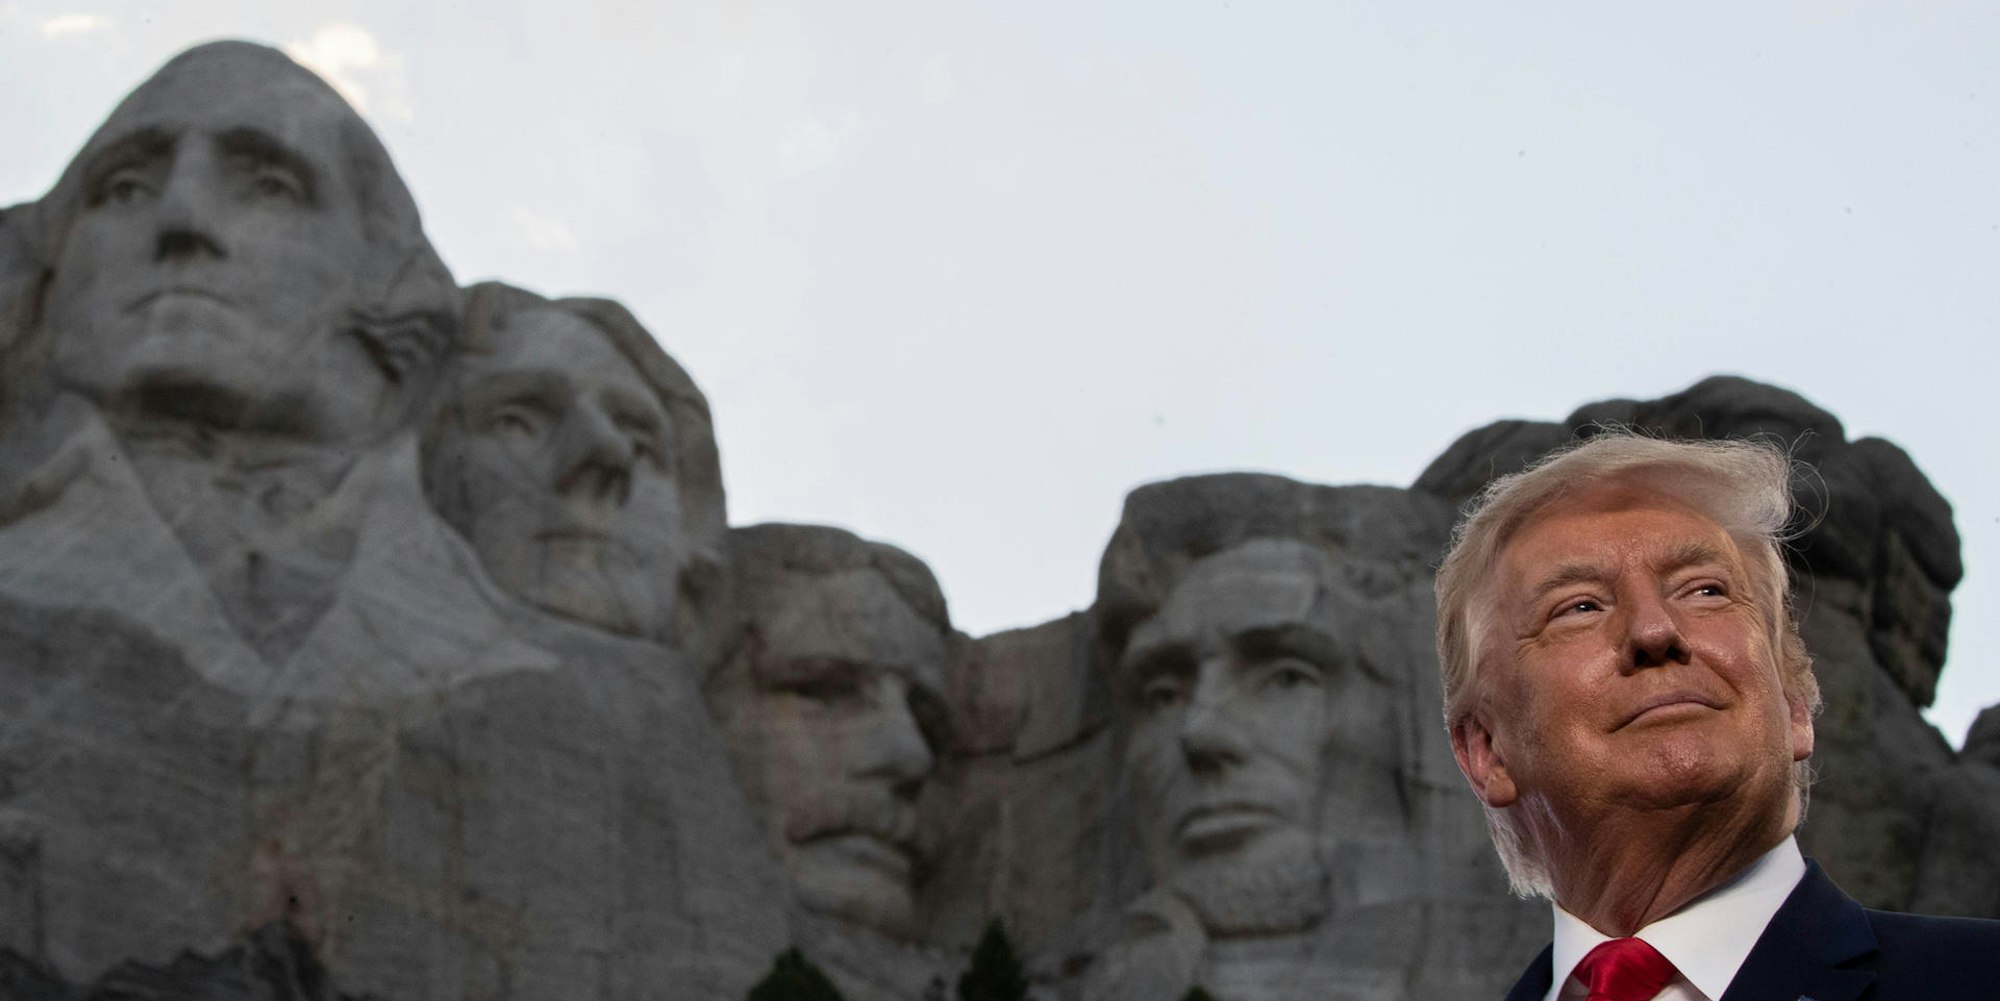 Trump Mount Rushmore